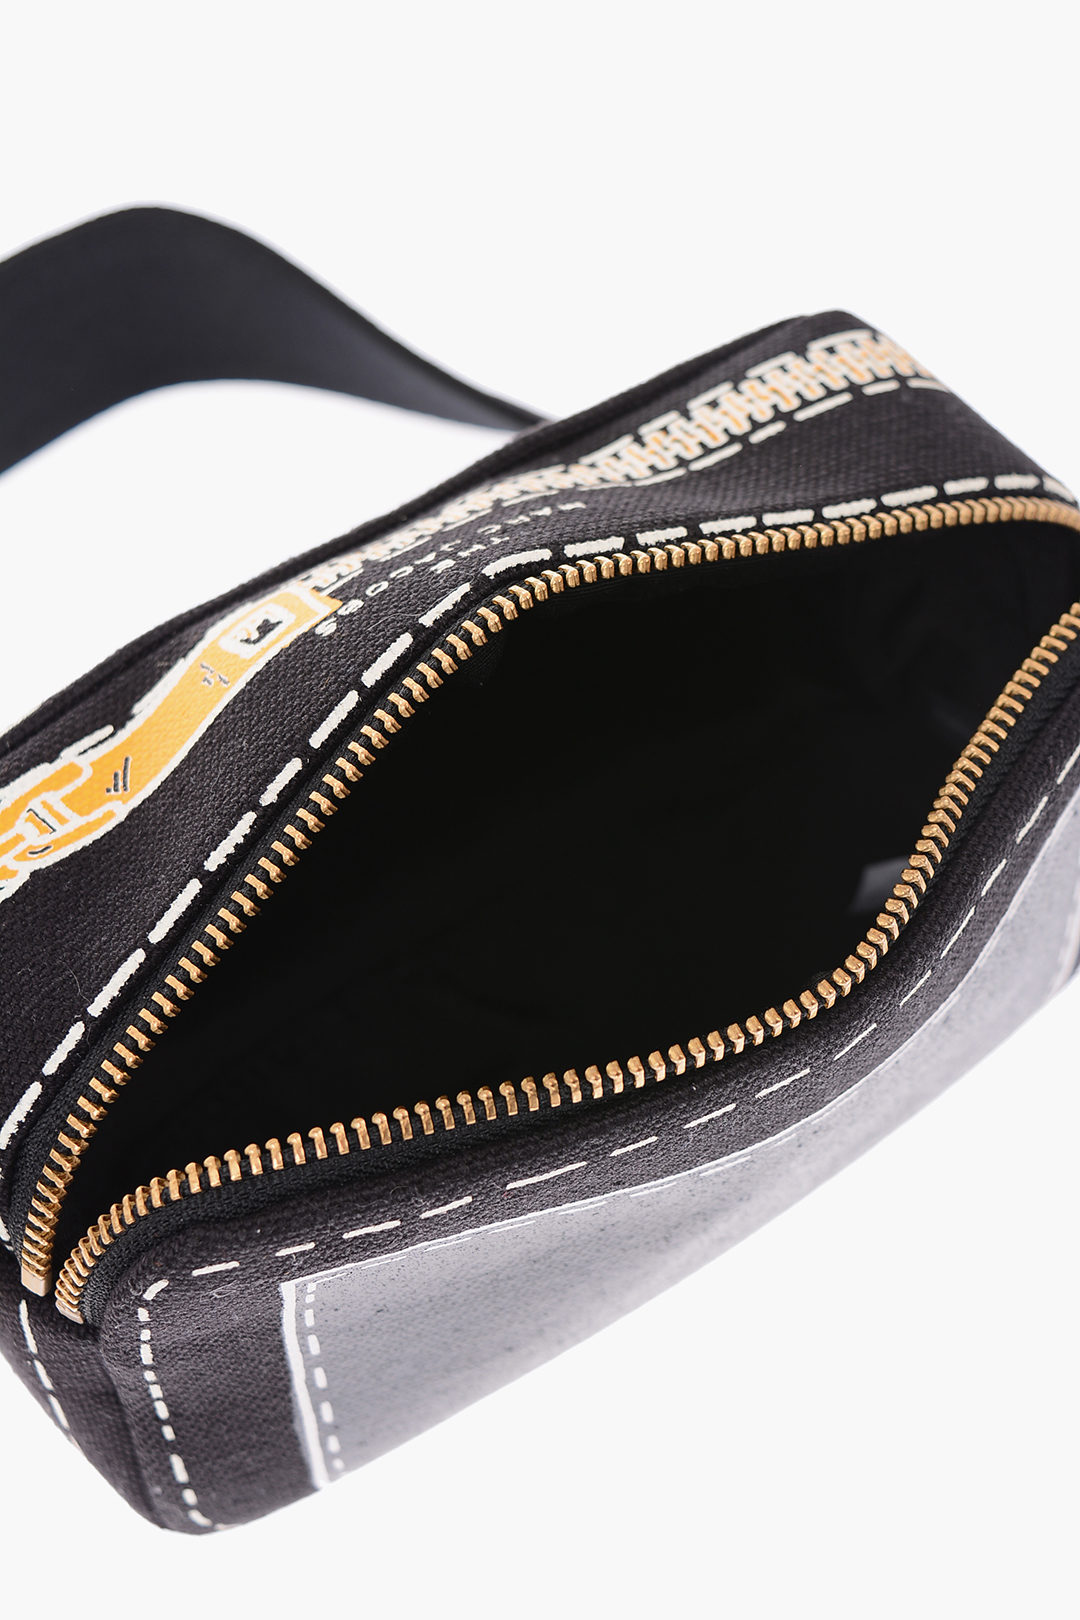 Marc Jacobs removable shoulder strap THE TROMPE L'OEIL SNAPSHOT camera bag  women - Glamood Outlet